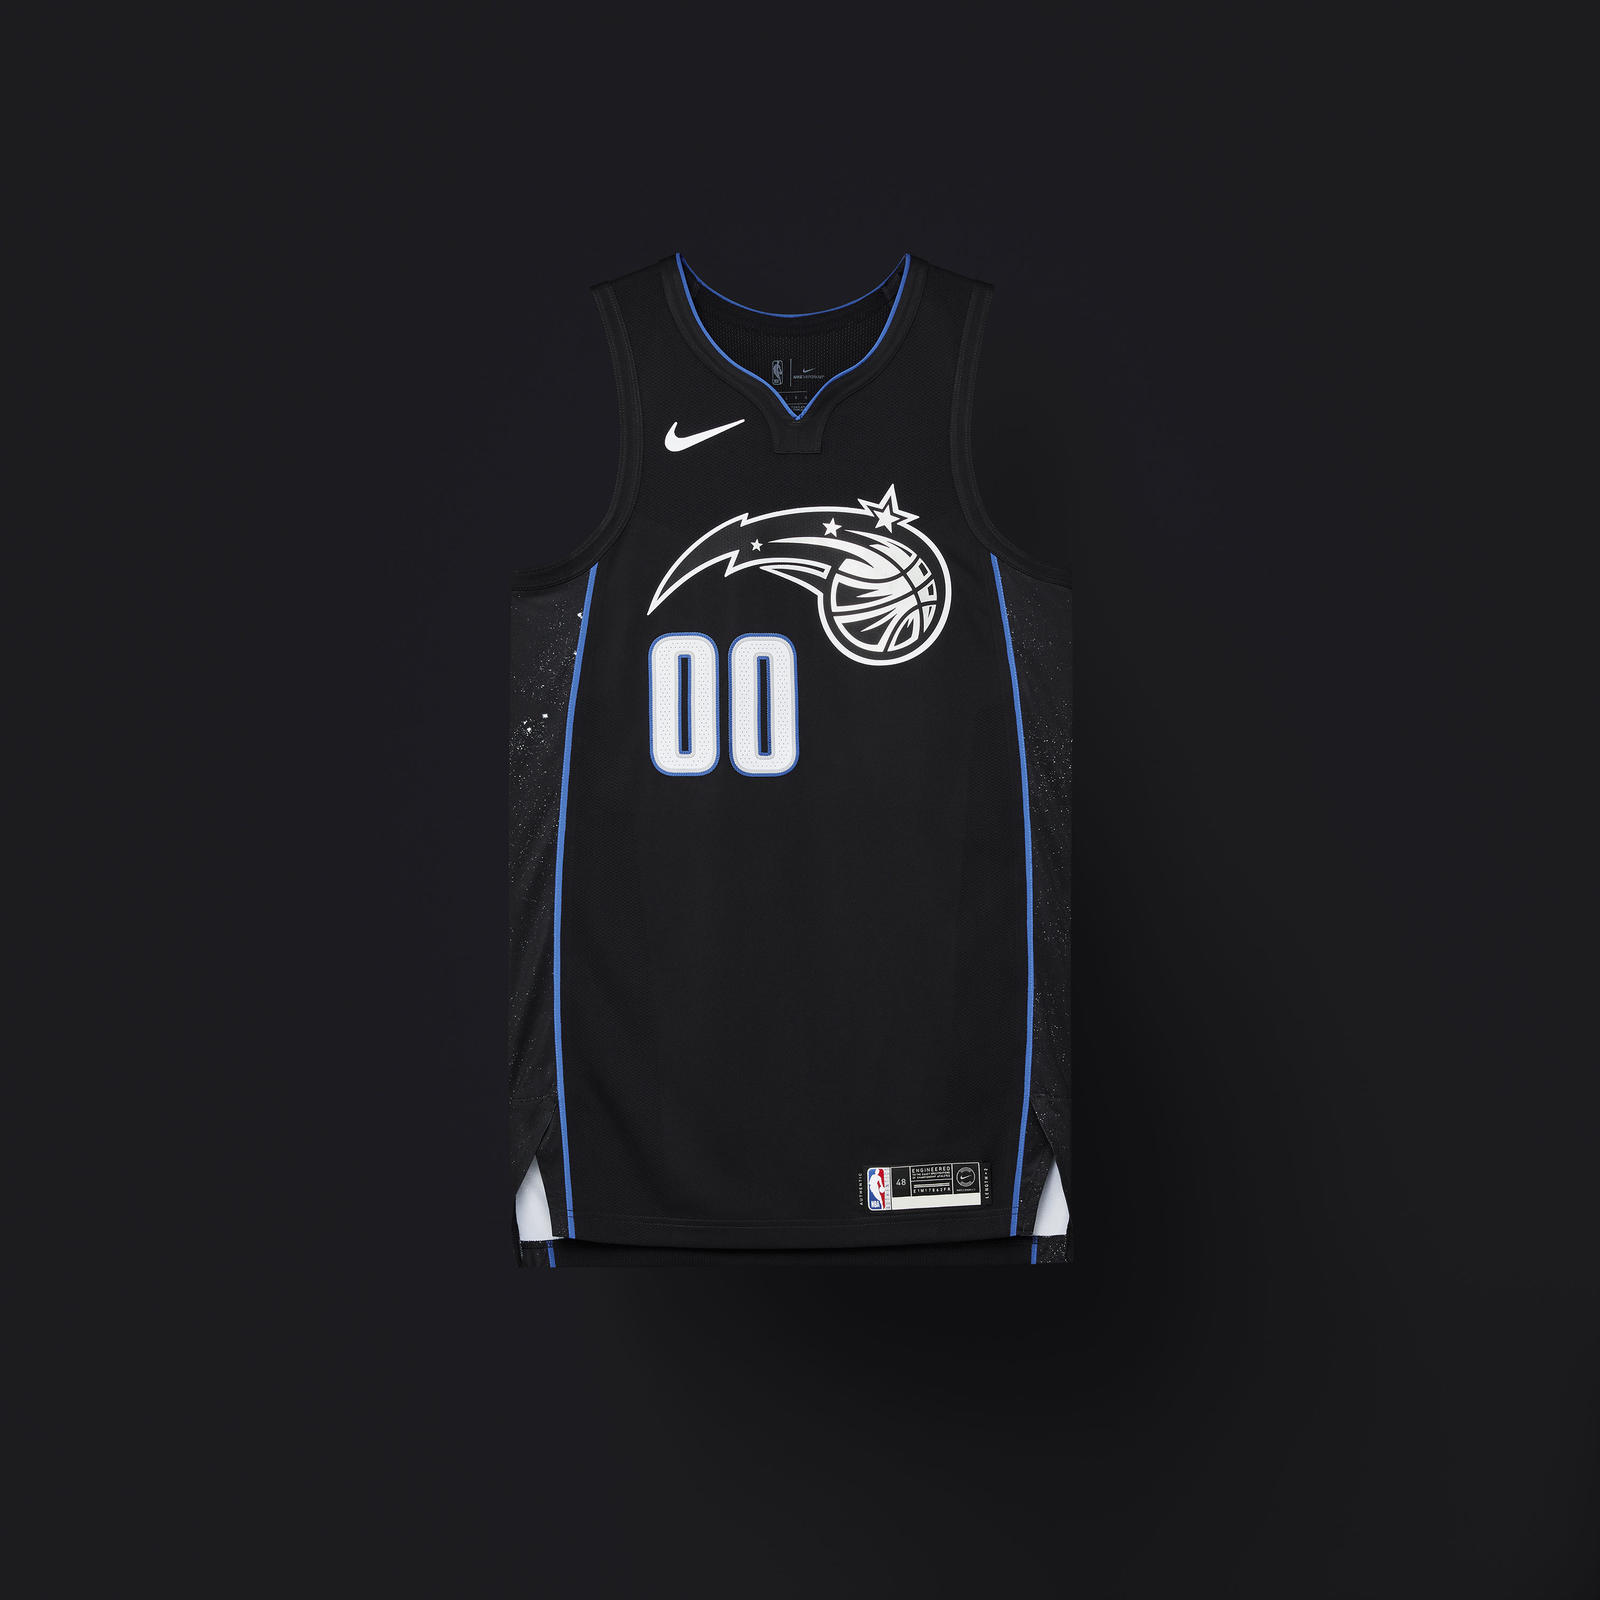 NBA City Edition Uniforms 2018-19 (20 